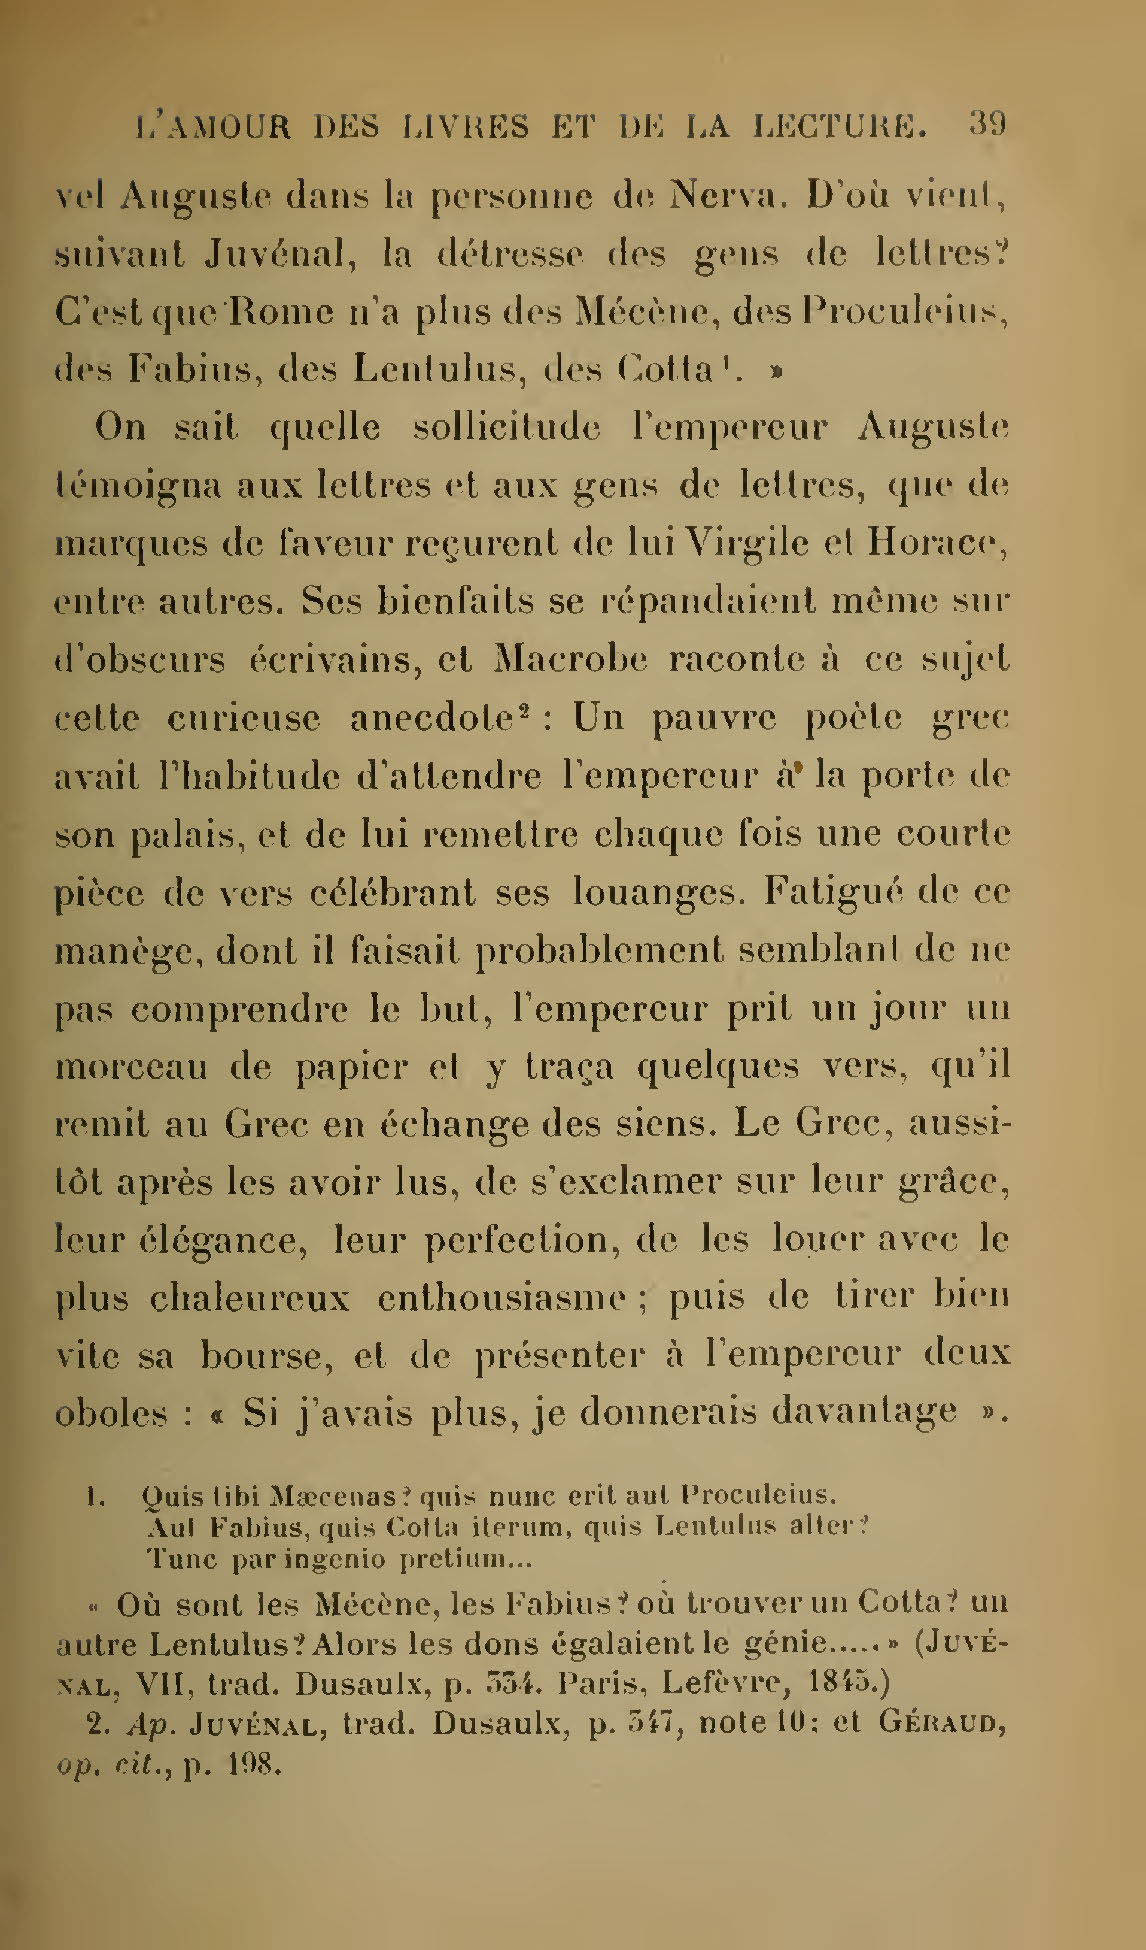 Albert Cim, Le Livre, t. I, p. 39.